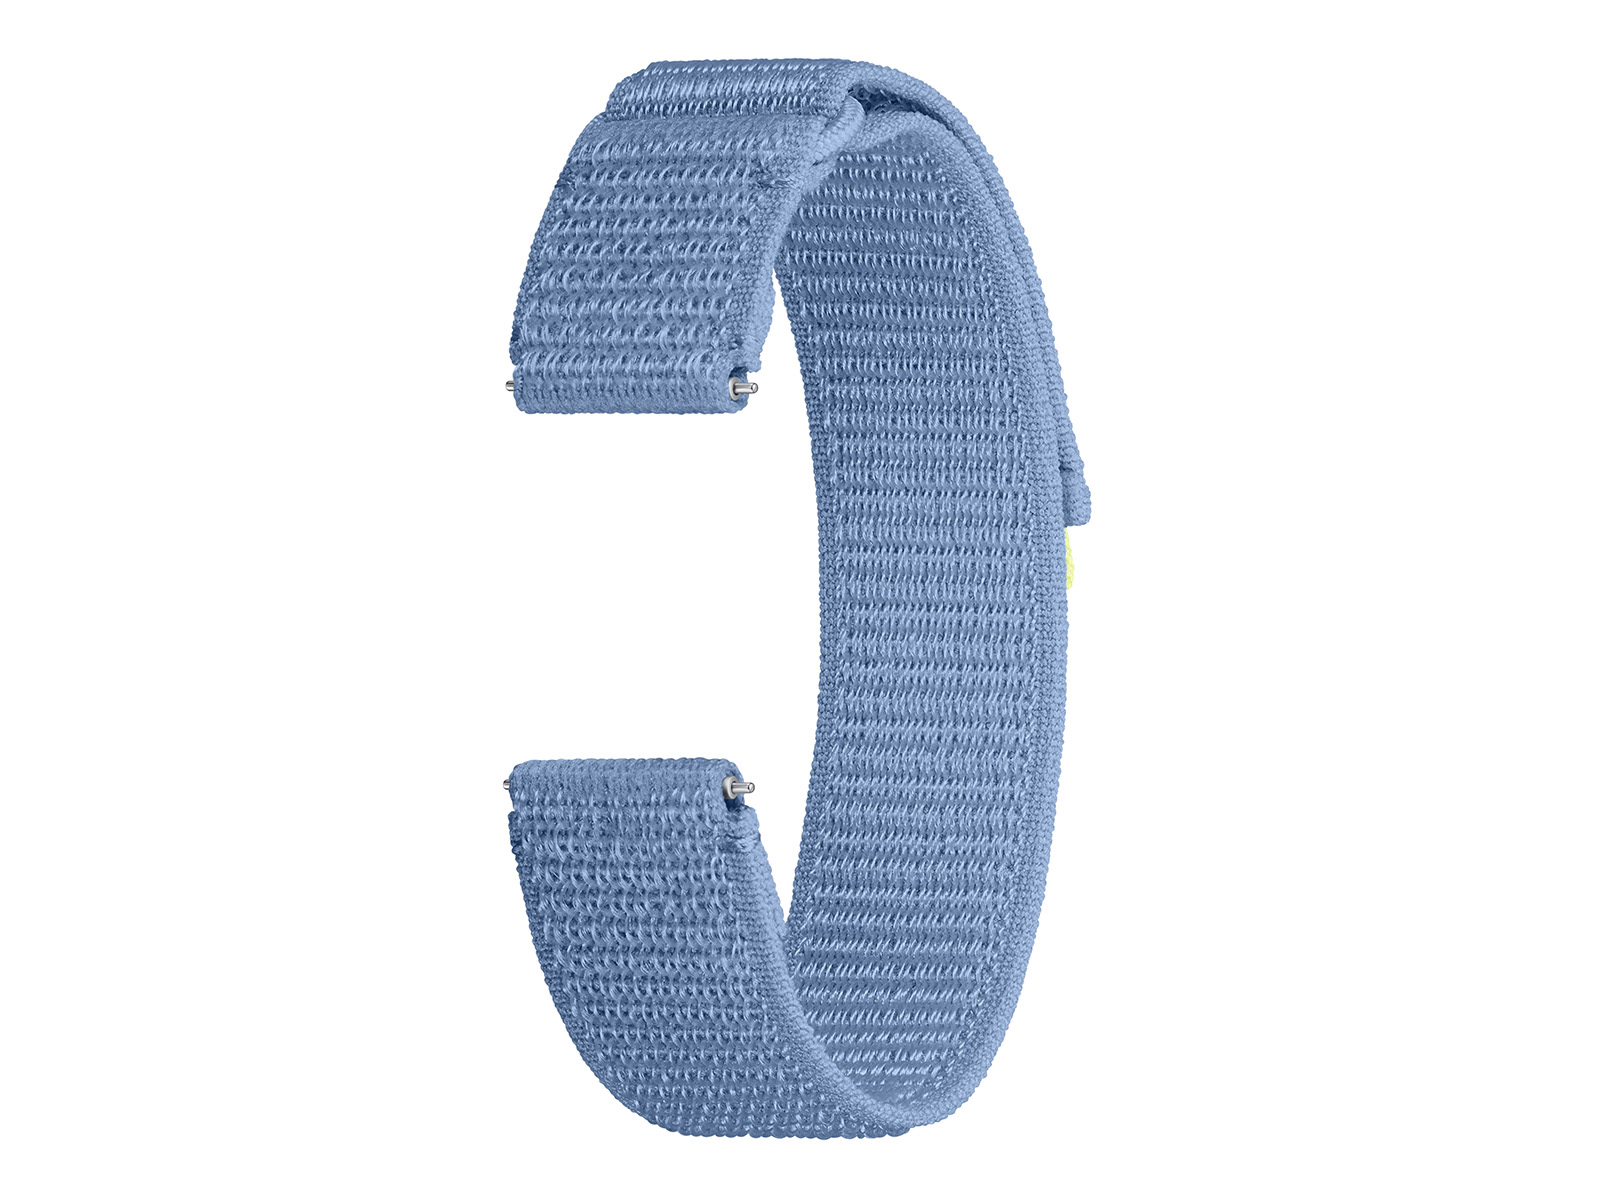 Thumbnail image of Galaxy Watch Fabric Band, M/L, Blue